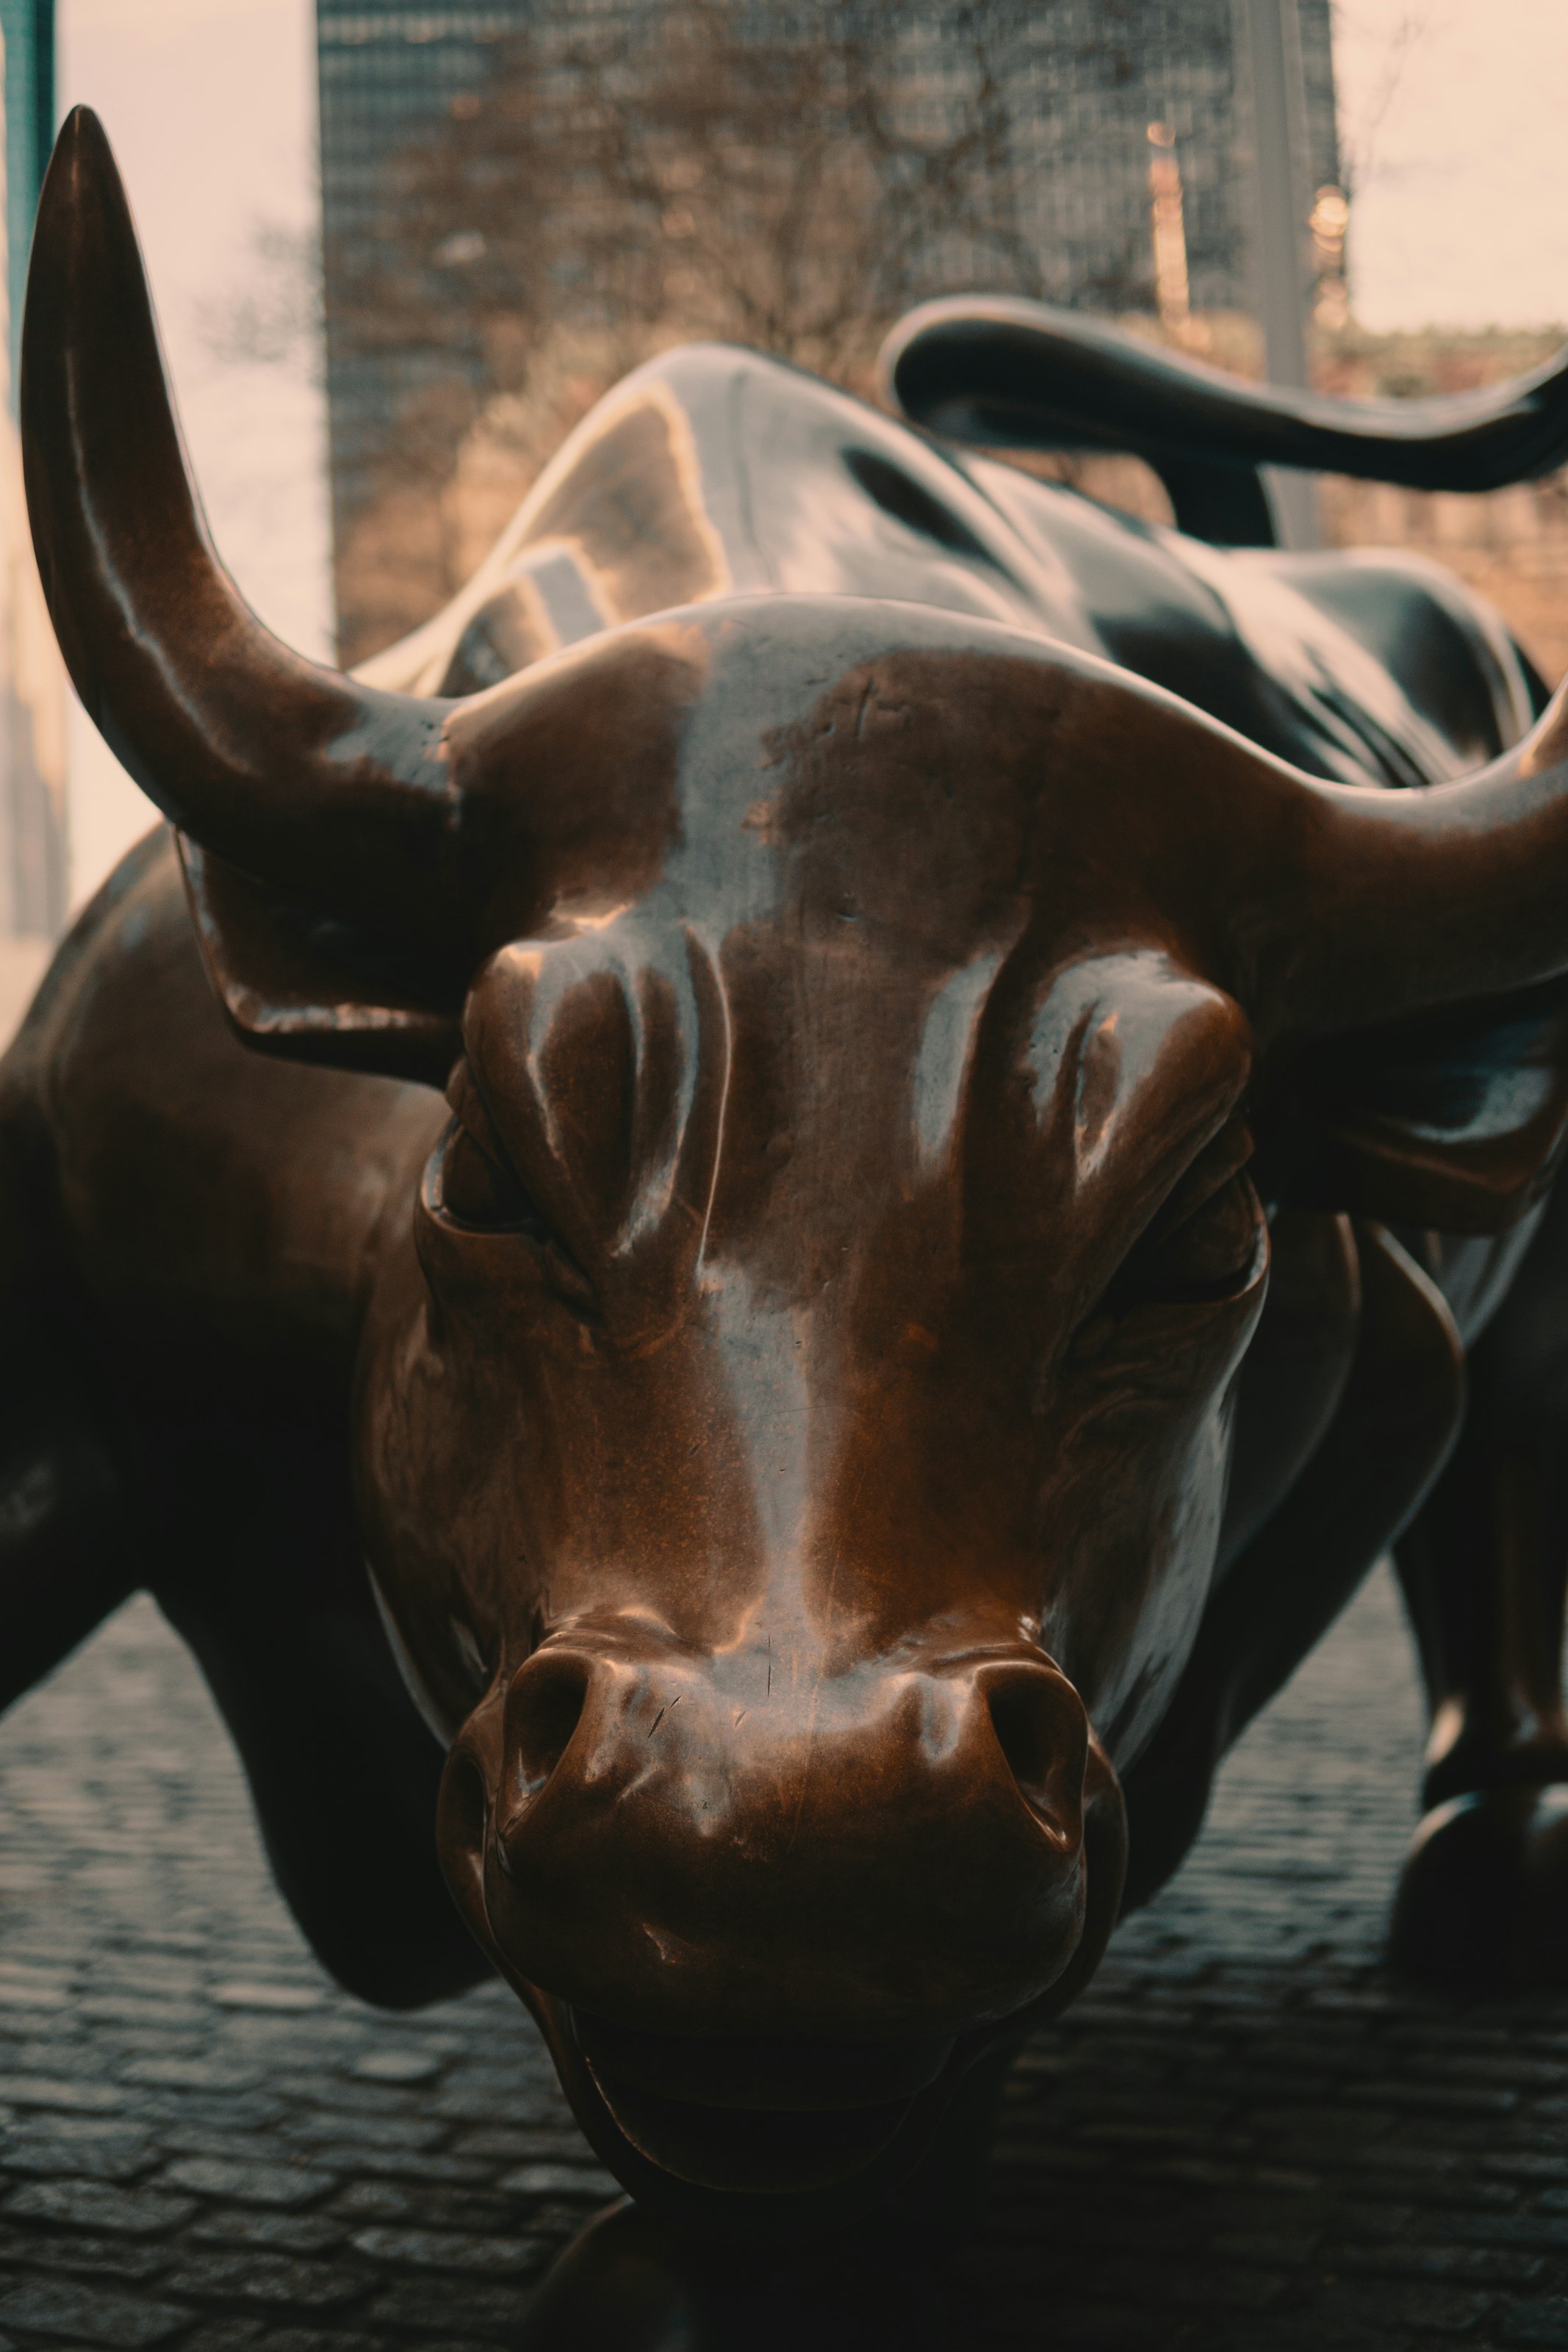 Caption: “Charging Bull” or “Wall Street Bull” in New York City